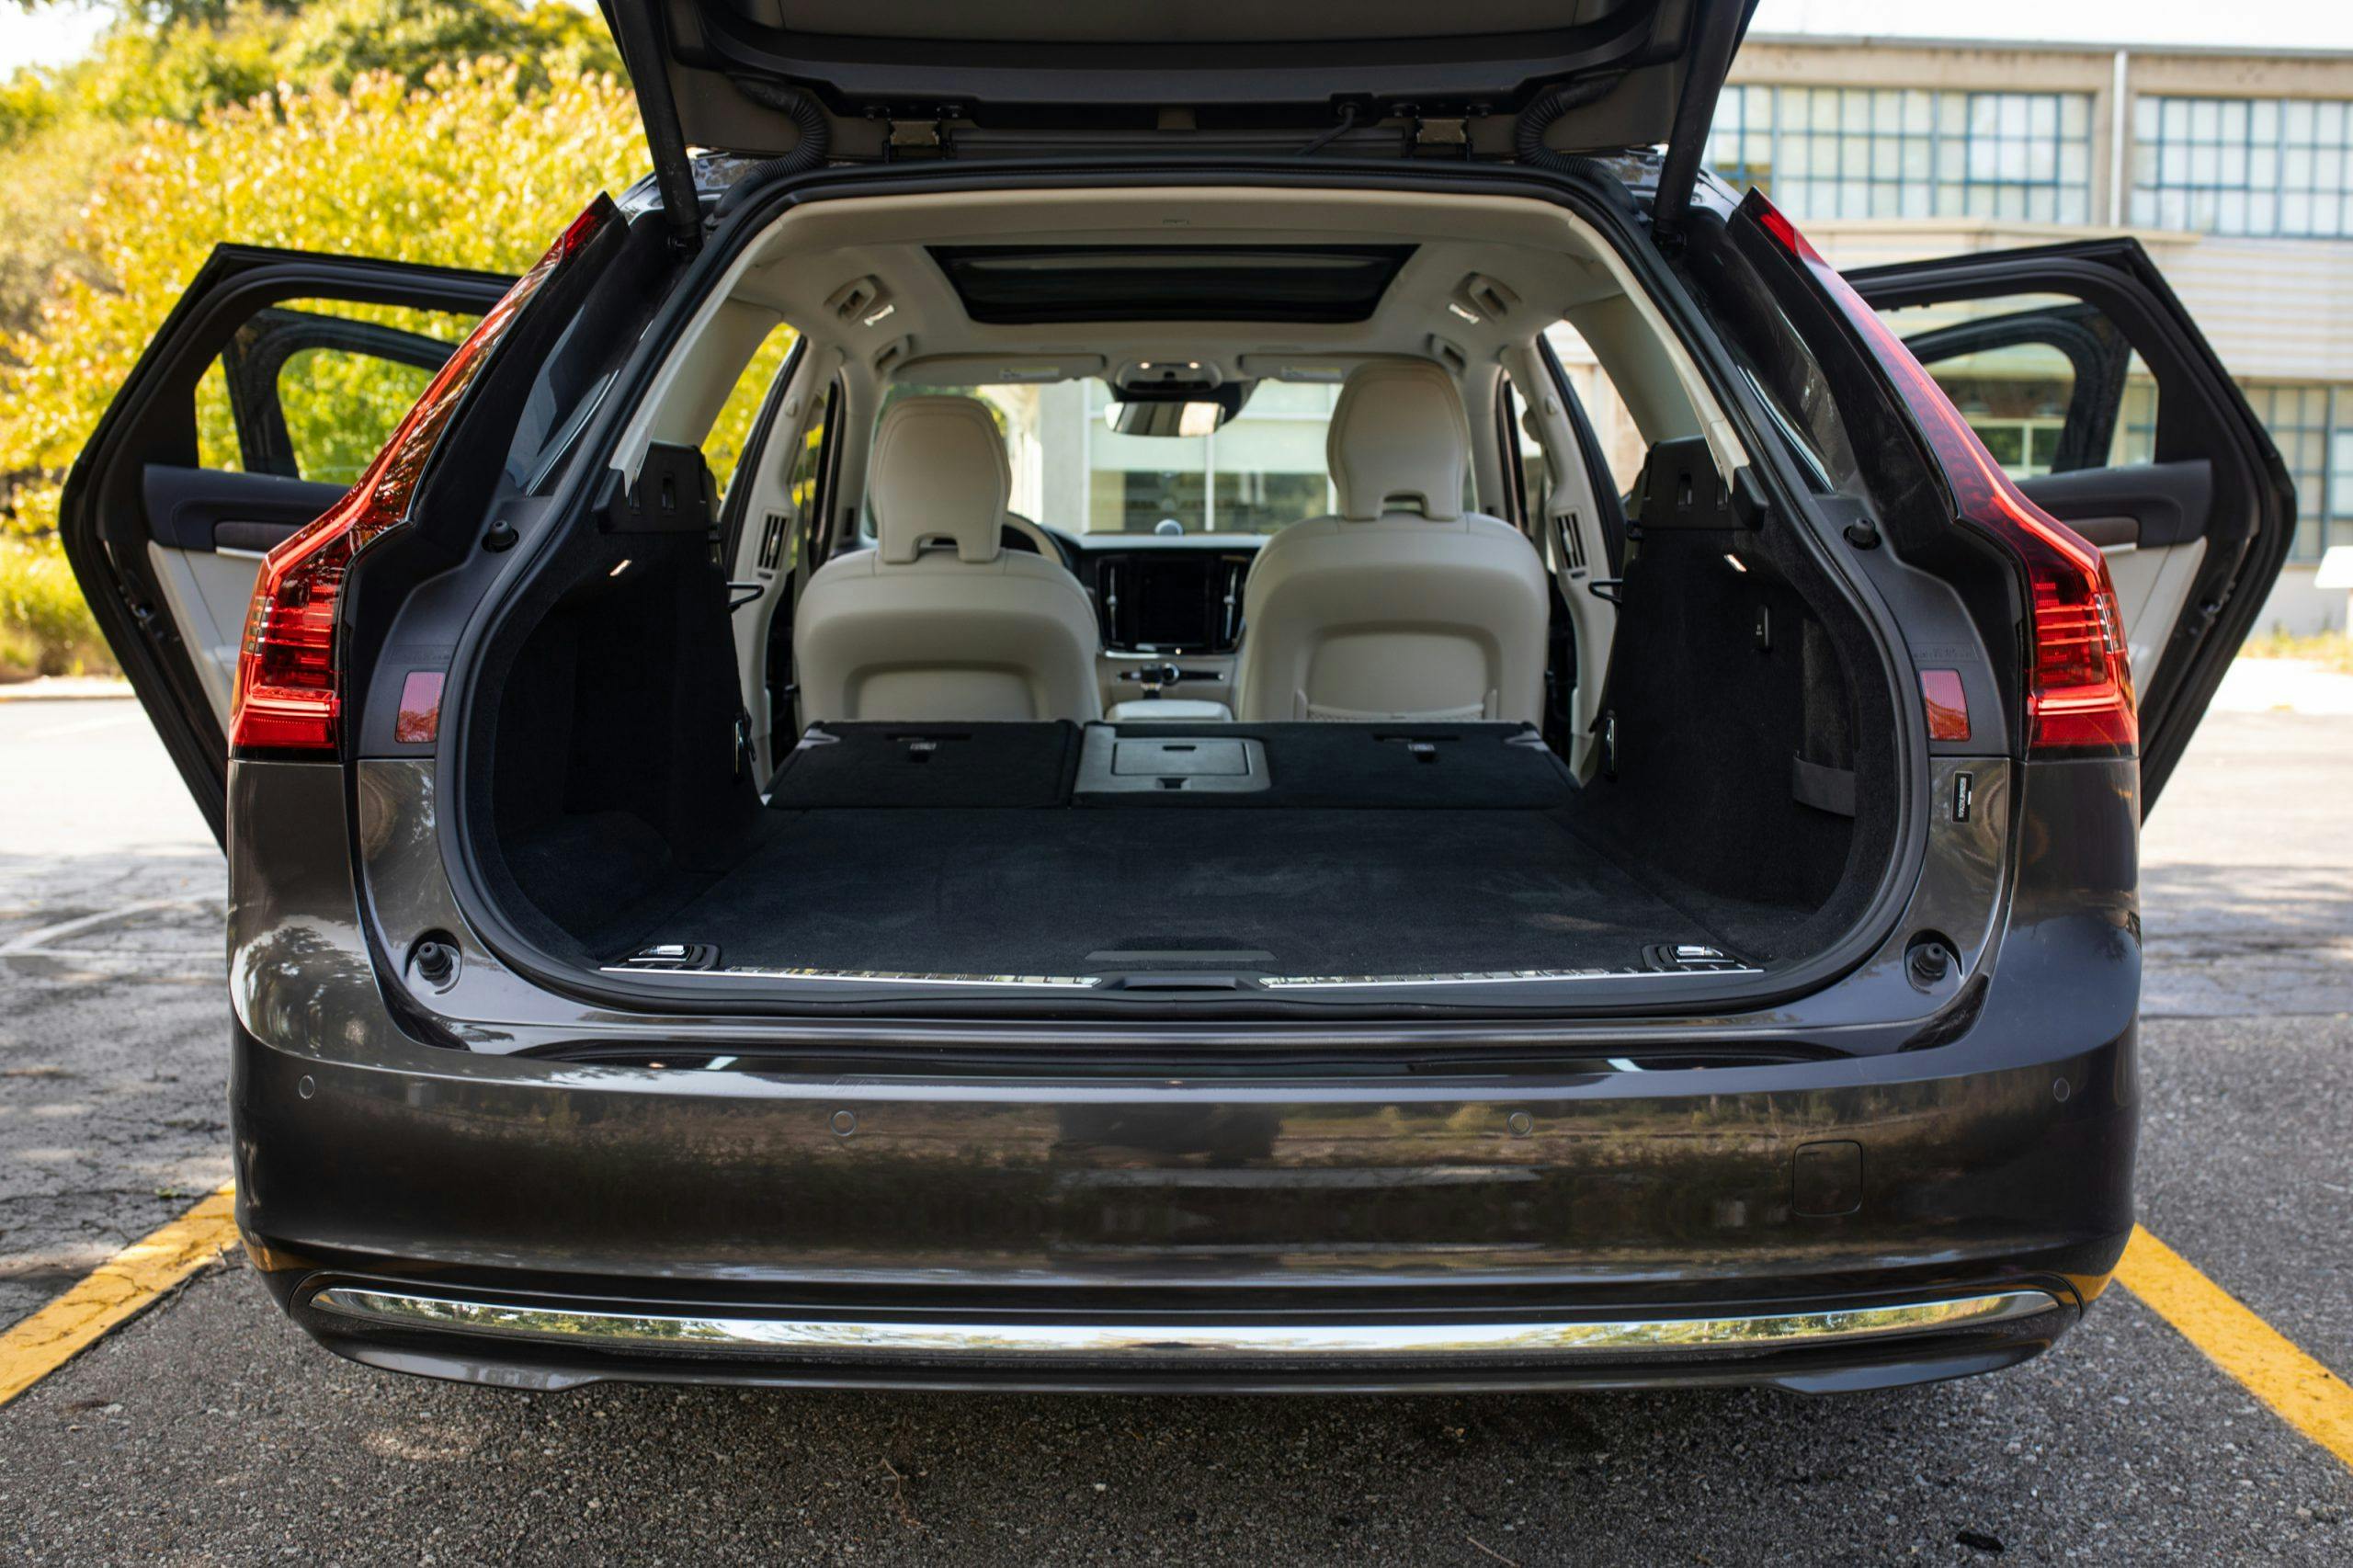 Volvo V90 rear open trunk cargo area